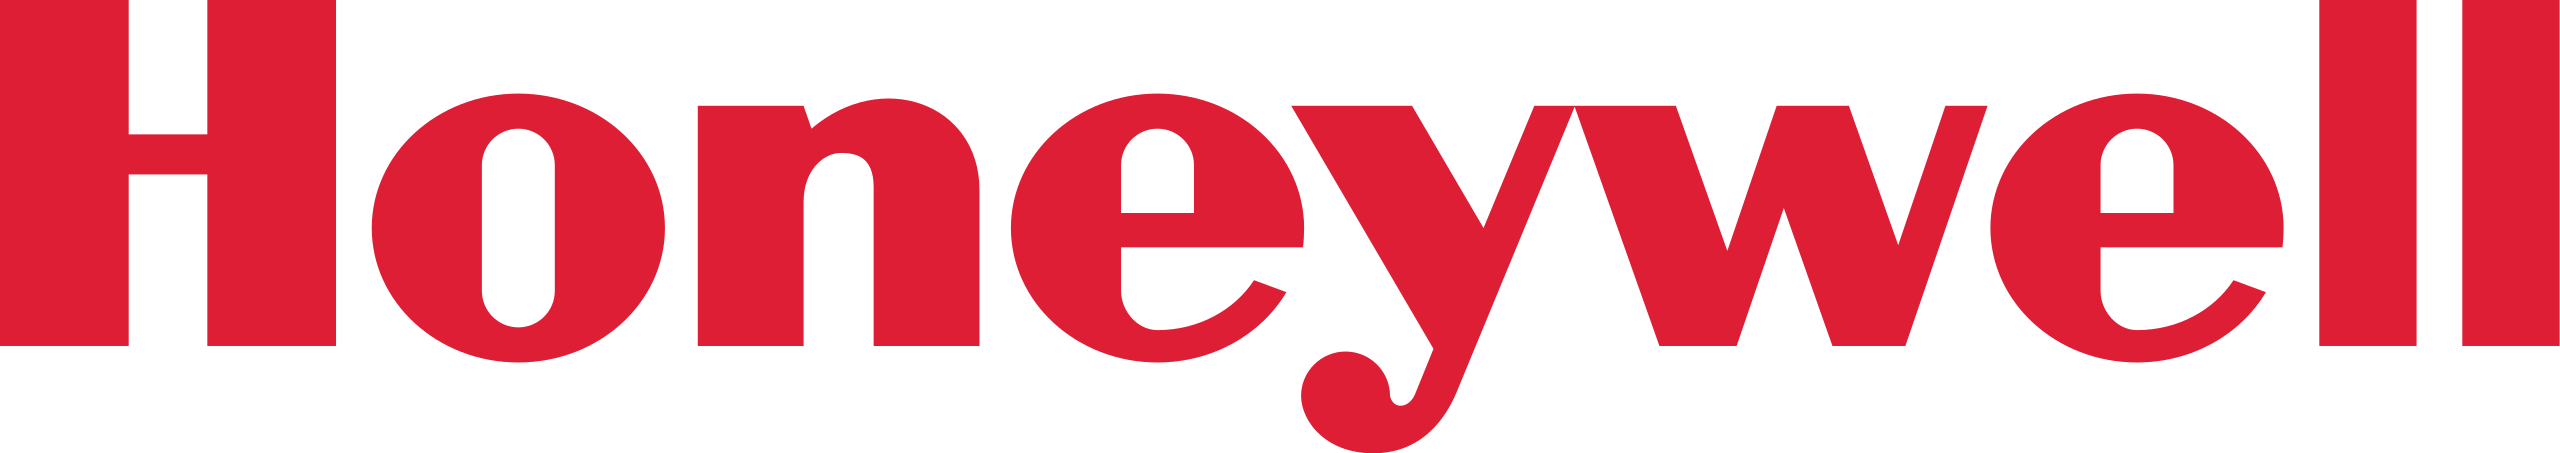 2560px Honeywell logo - Tableau de bord management